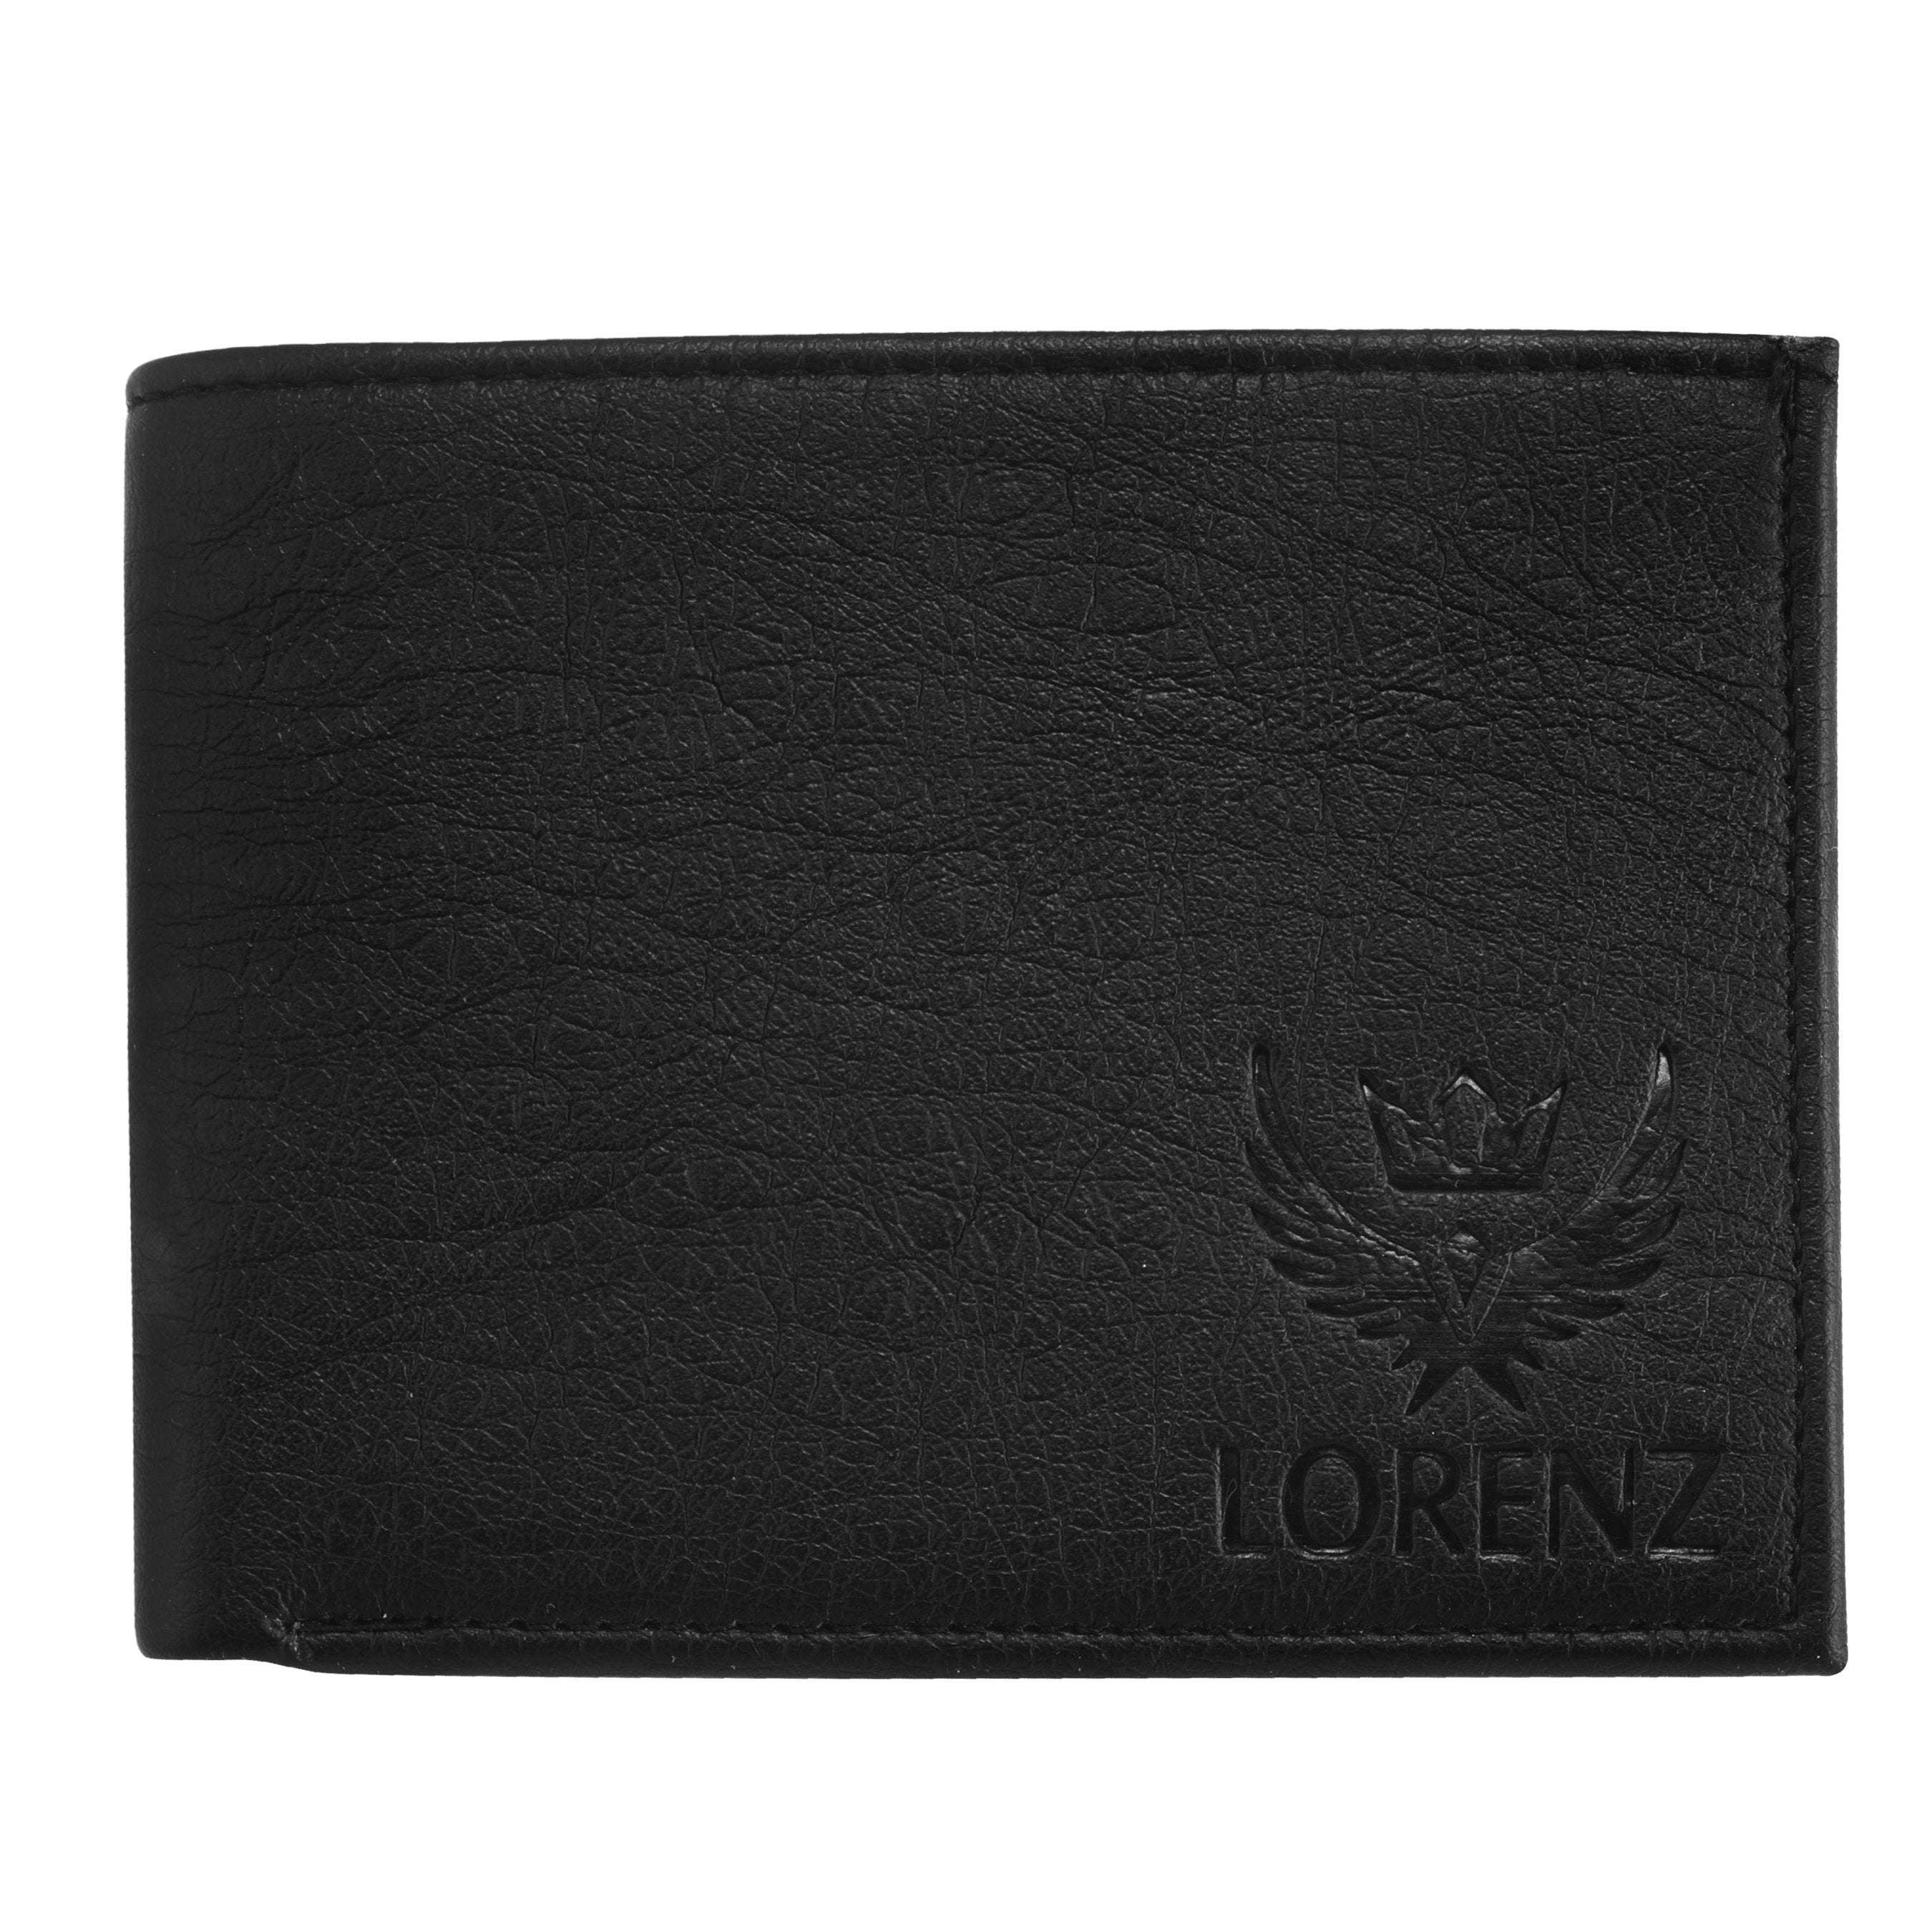 Lorenz Combo of Black Men's Wallet,Sunglasses & Watch - Lorenz Fashion